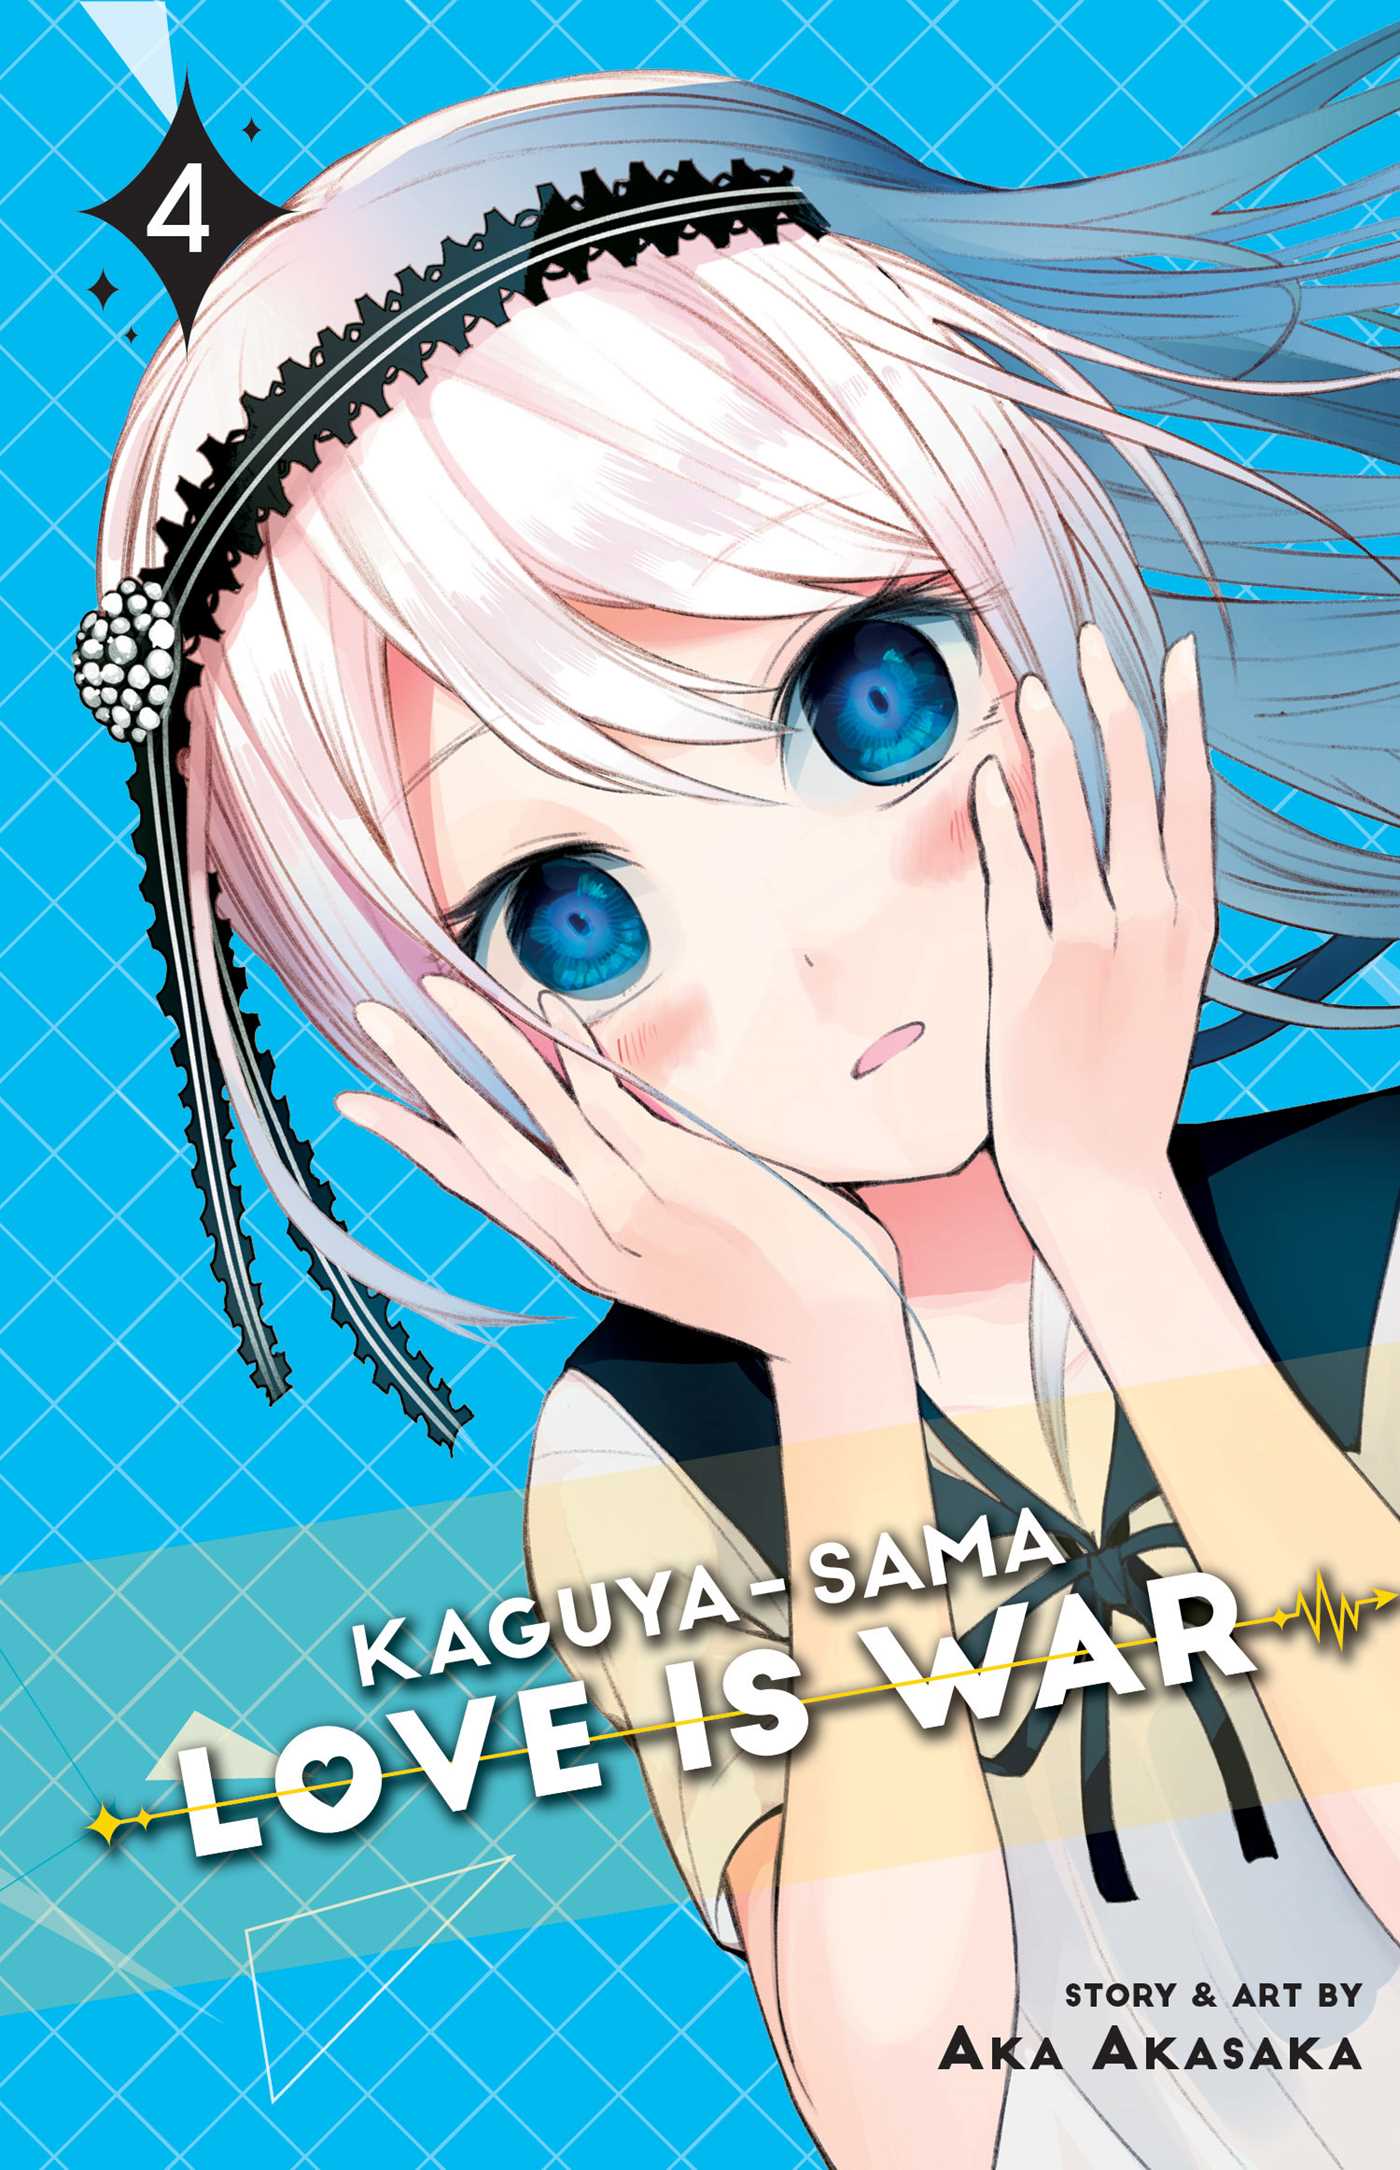 Book Cover Image - Kaguya Sama Love Is War Vol 4 , HD Wallpaper & Backgrounds